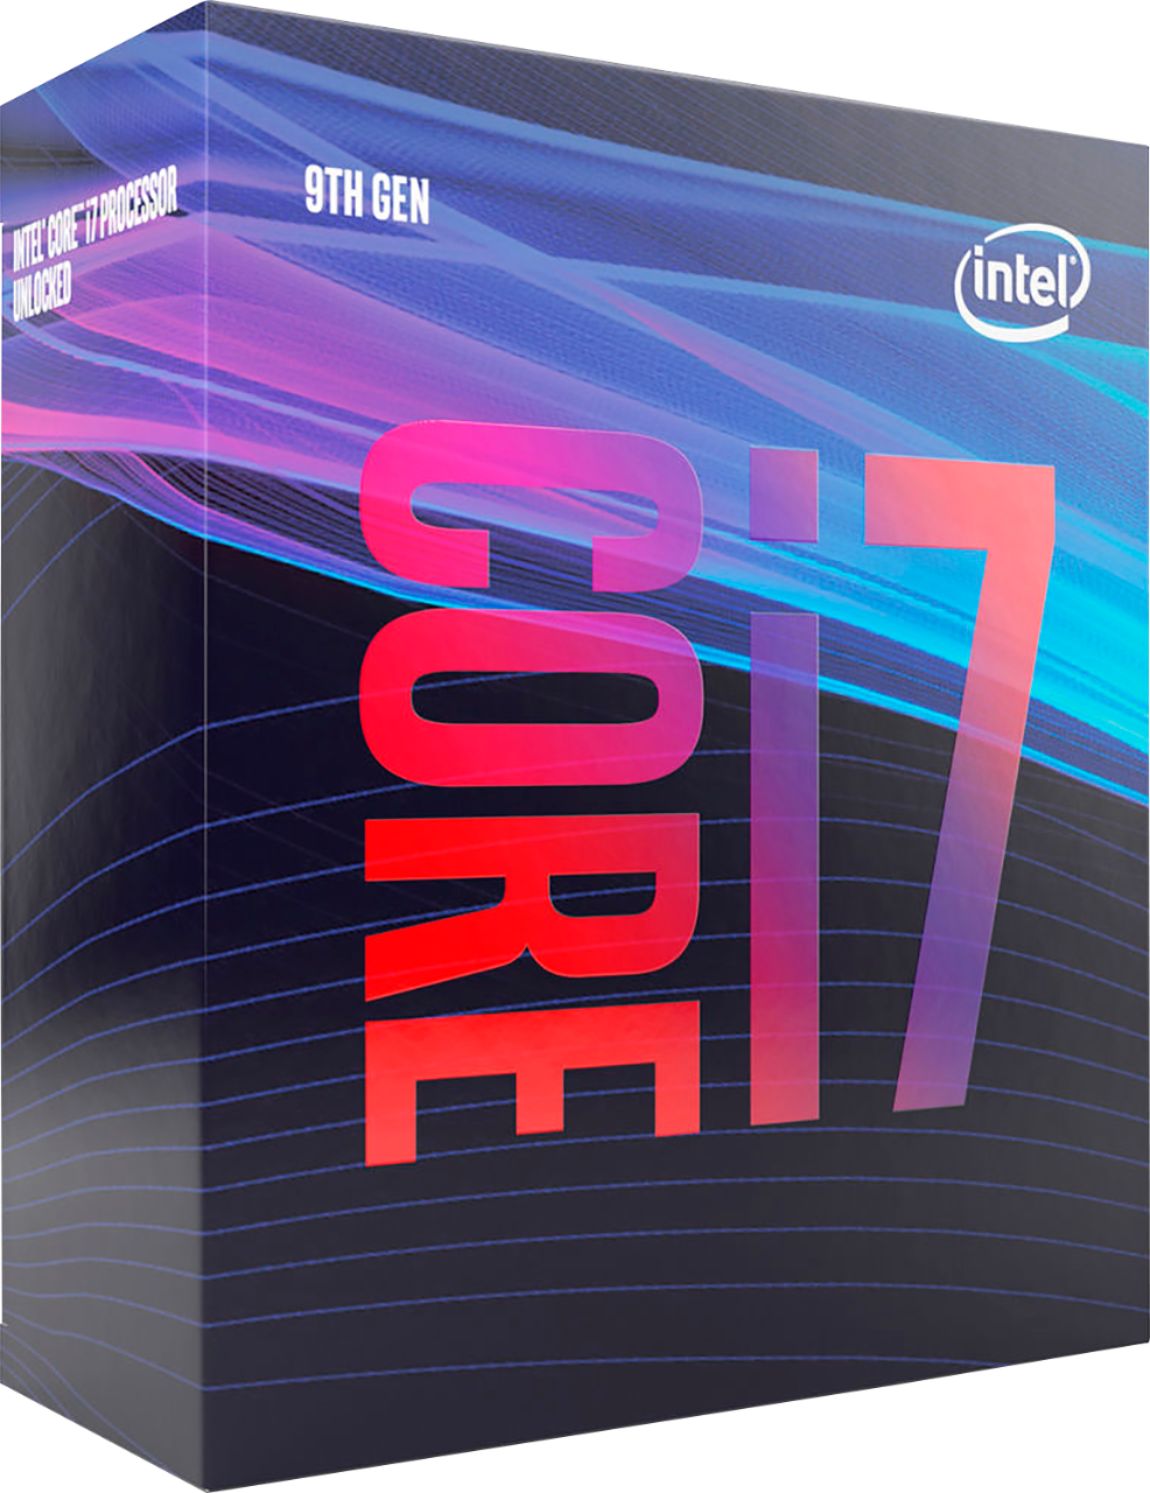 Best Buy: Intel Core i7-9700 9th Generation 8-core 8-Thread 3.0 